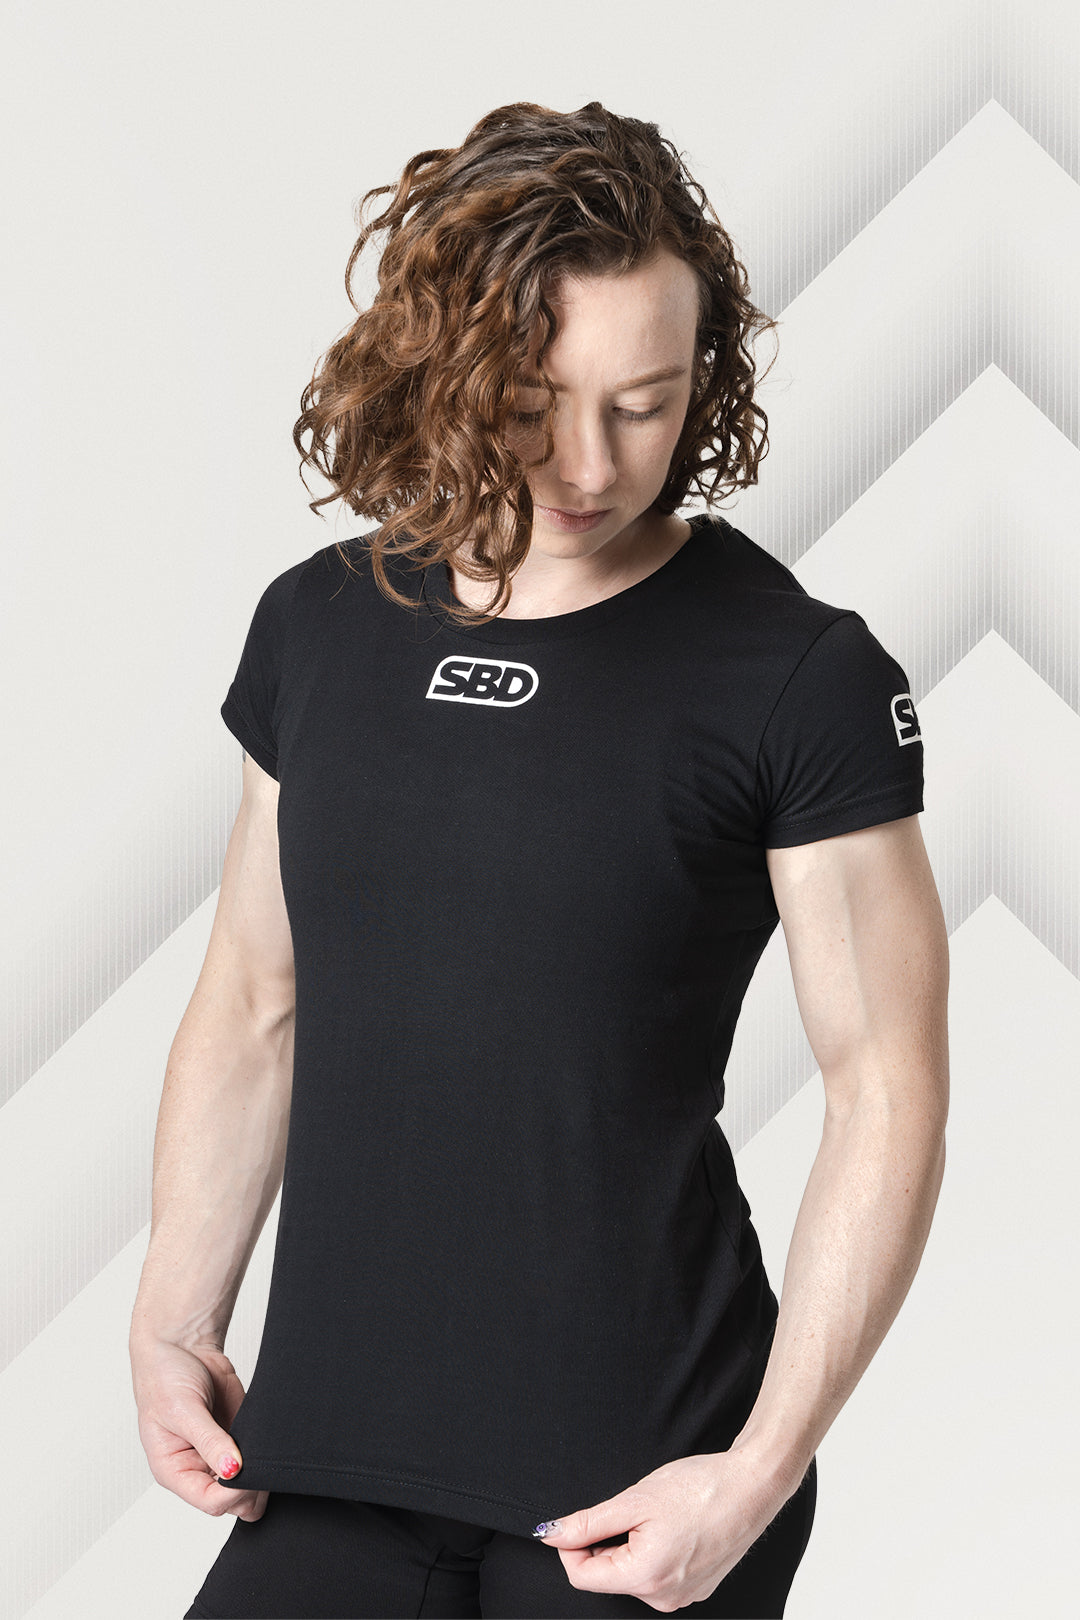 SBD Momentum T-Shirt - Comp